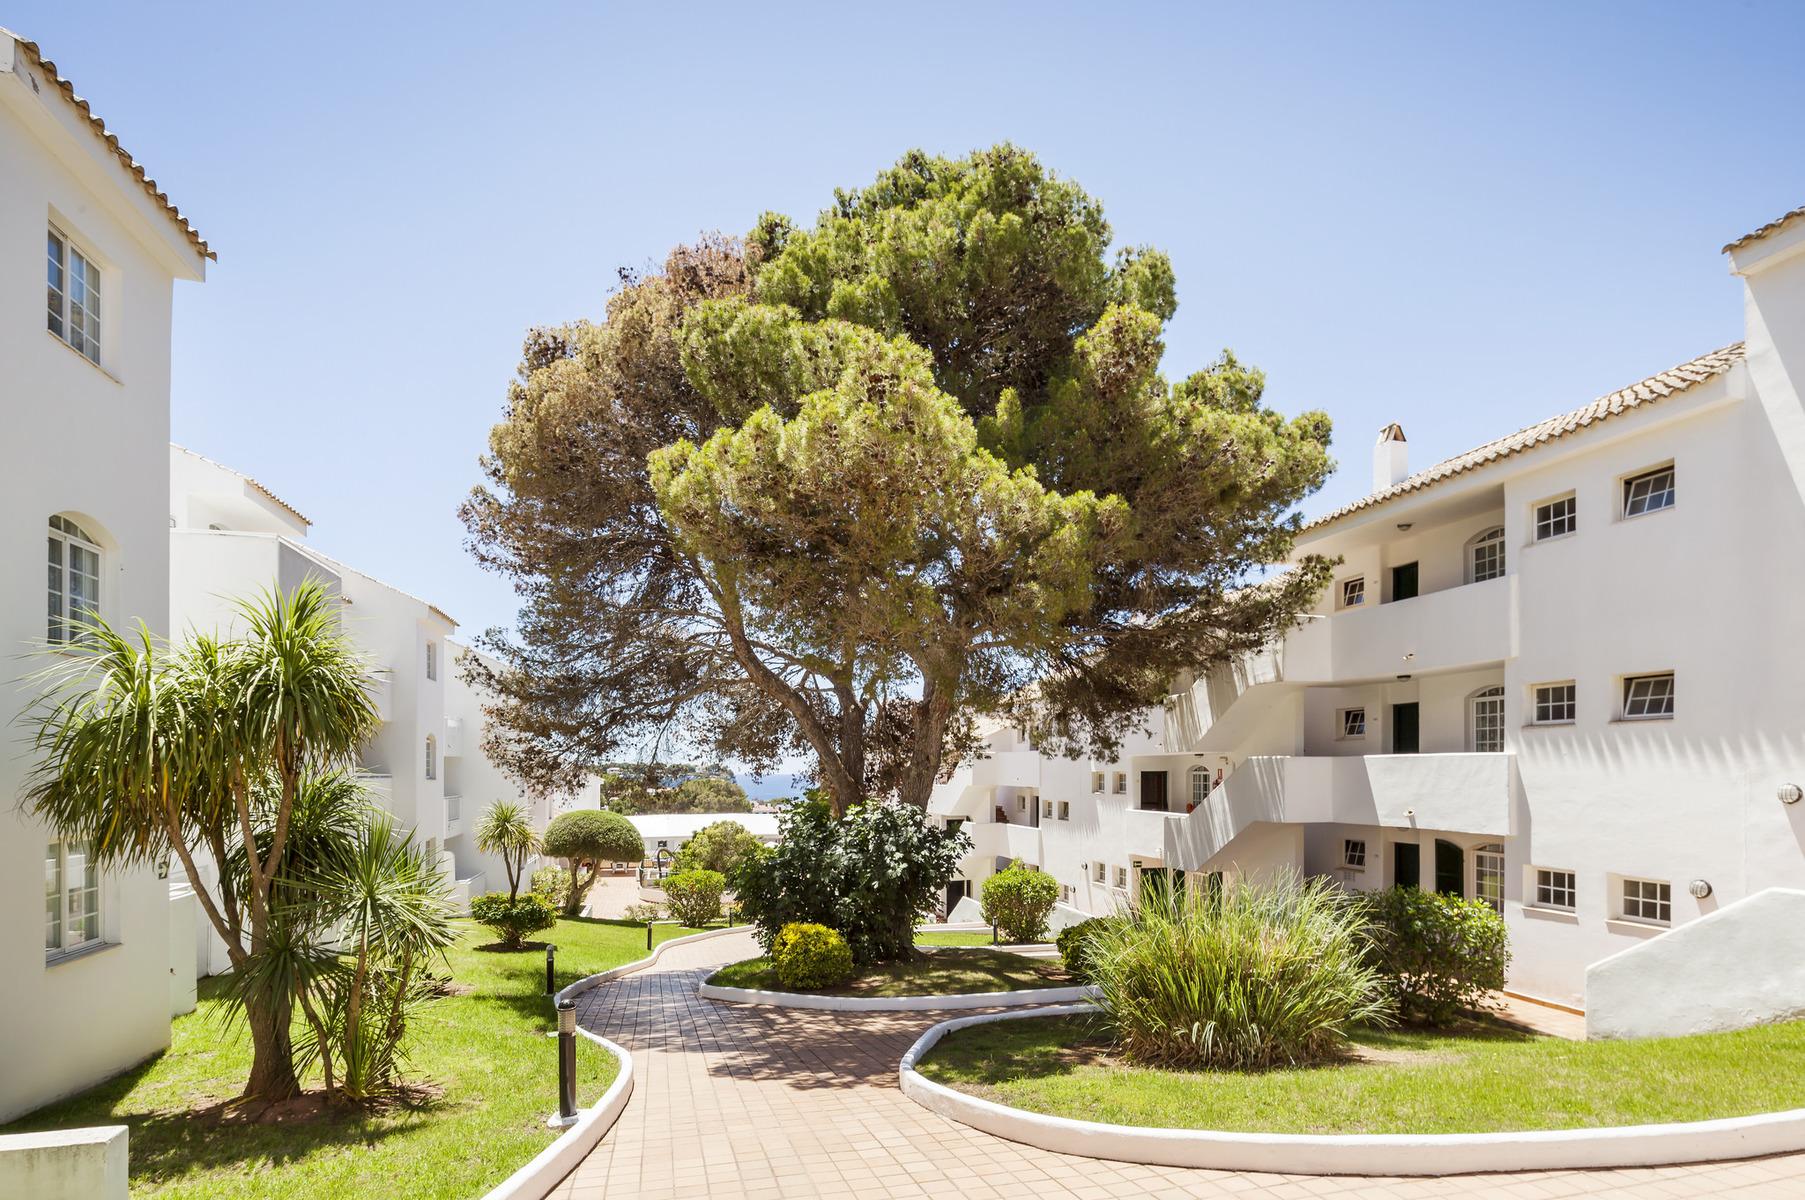 Hotel ILUNION Menorca